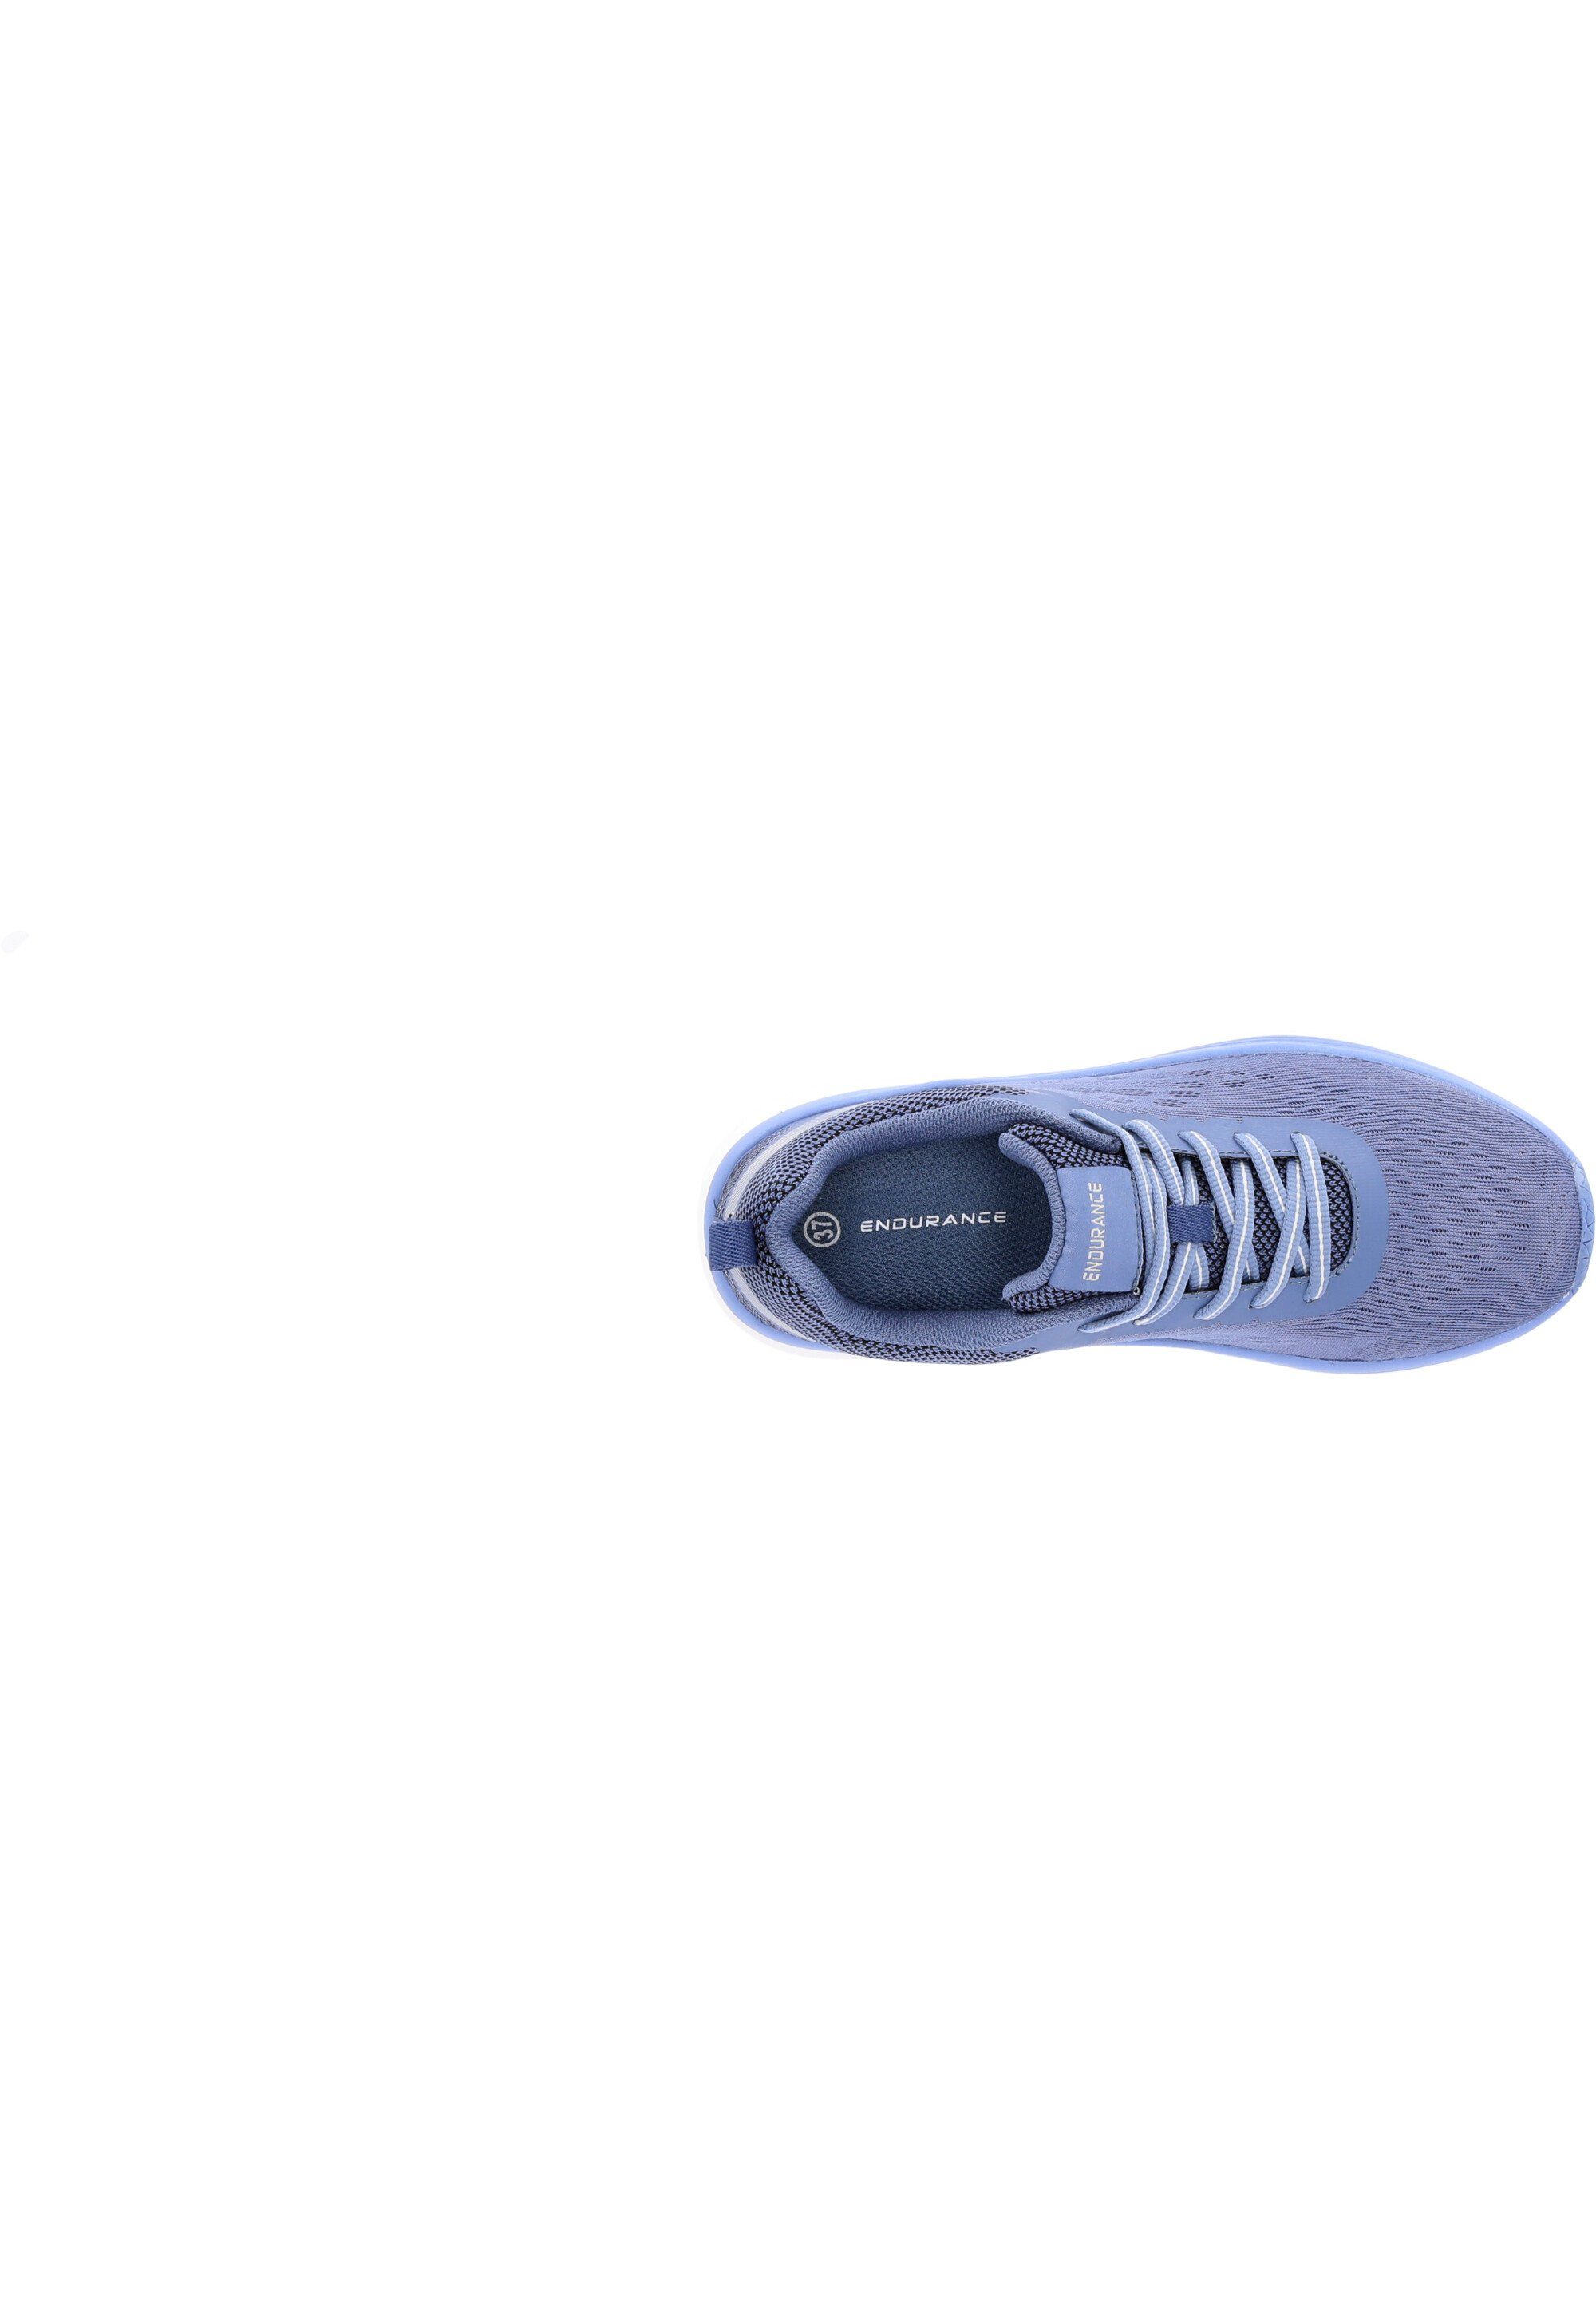 Sneaker ENDURANCE mit blau Fortlian komfortabler Dämpfung